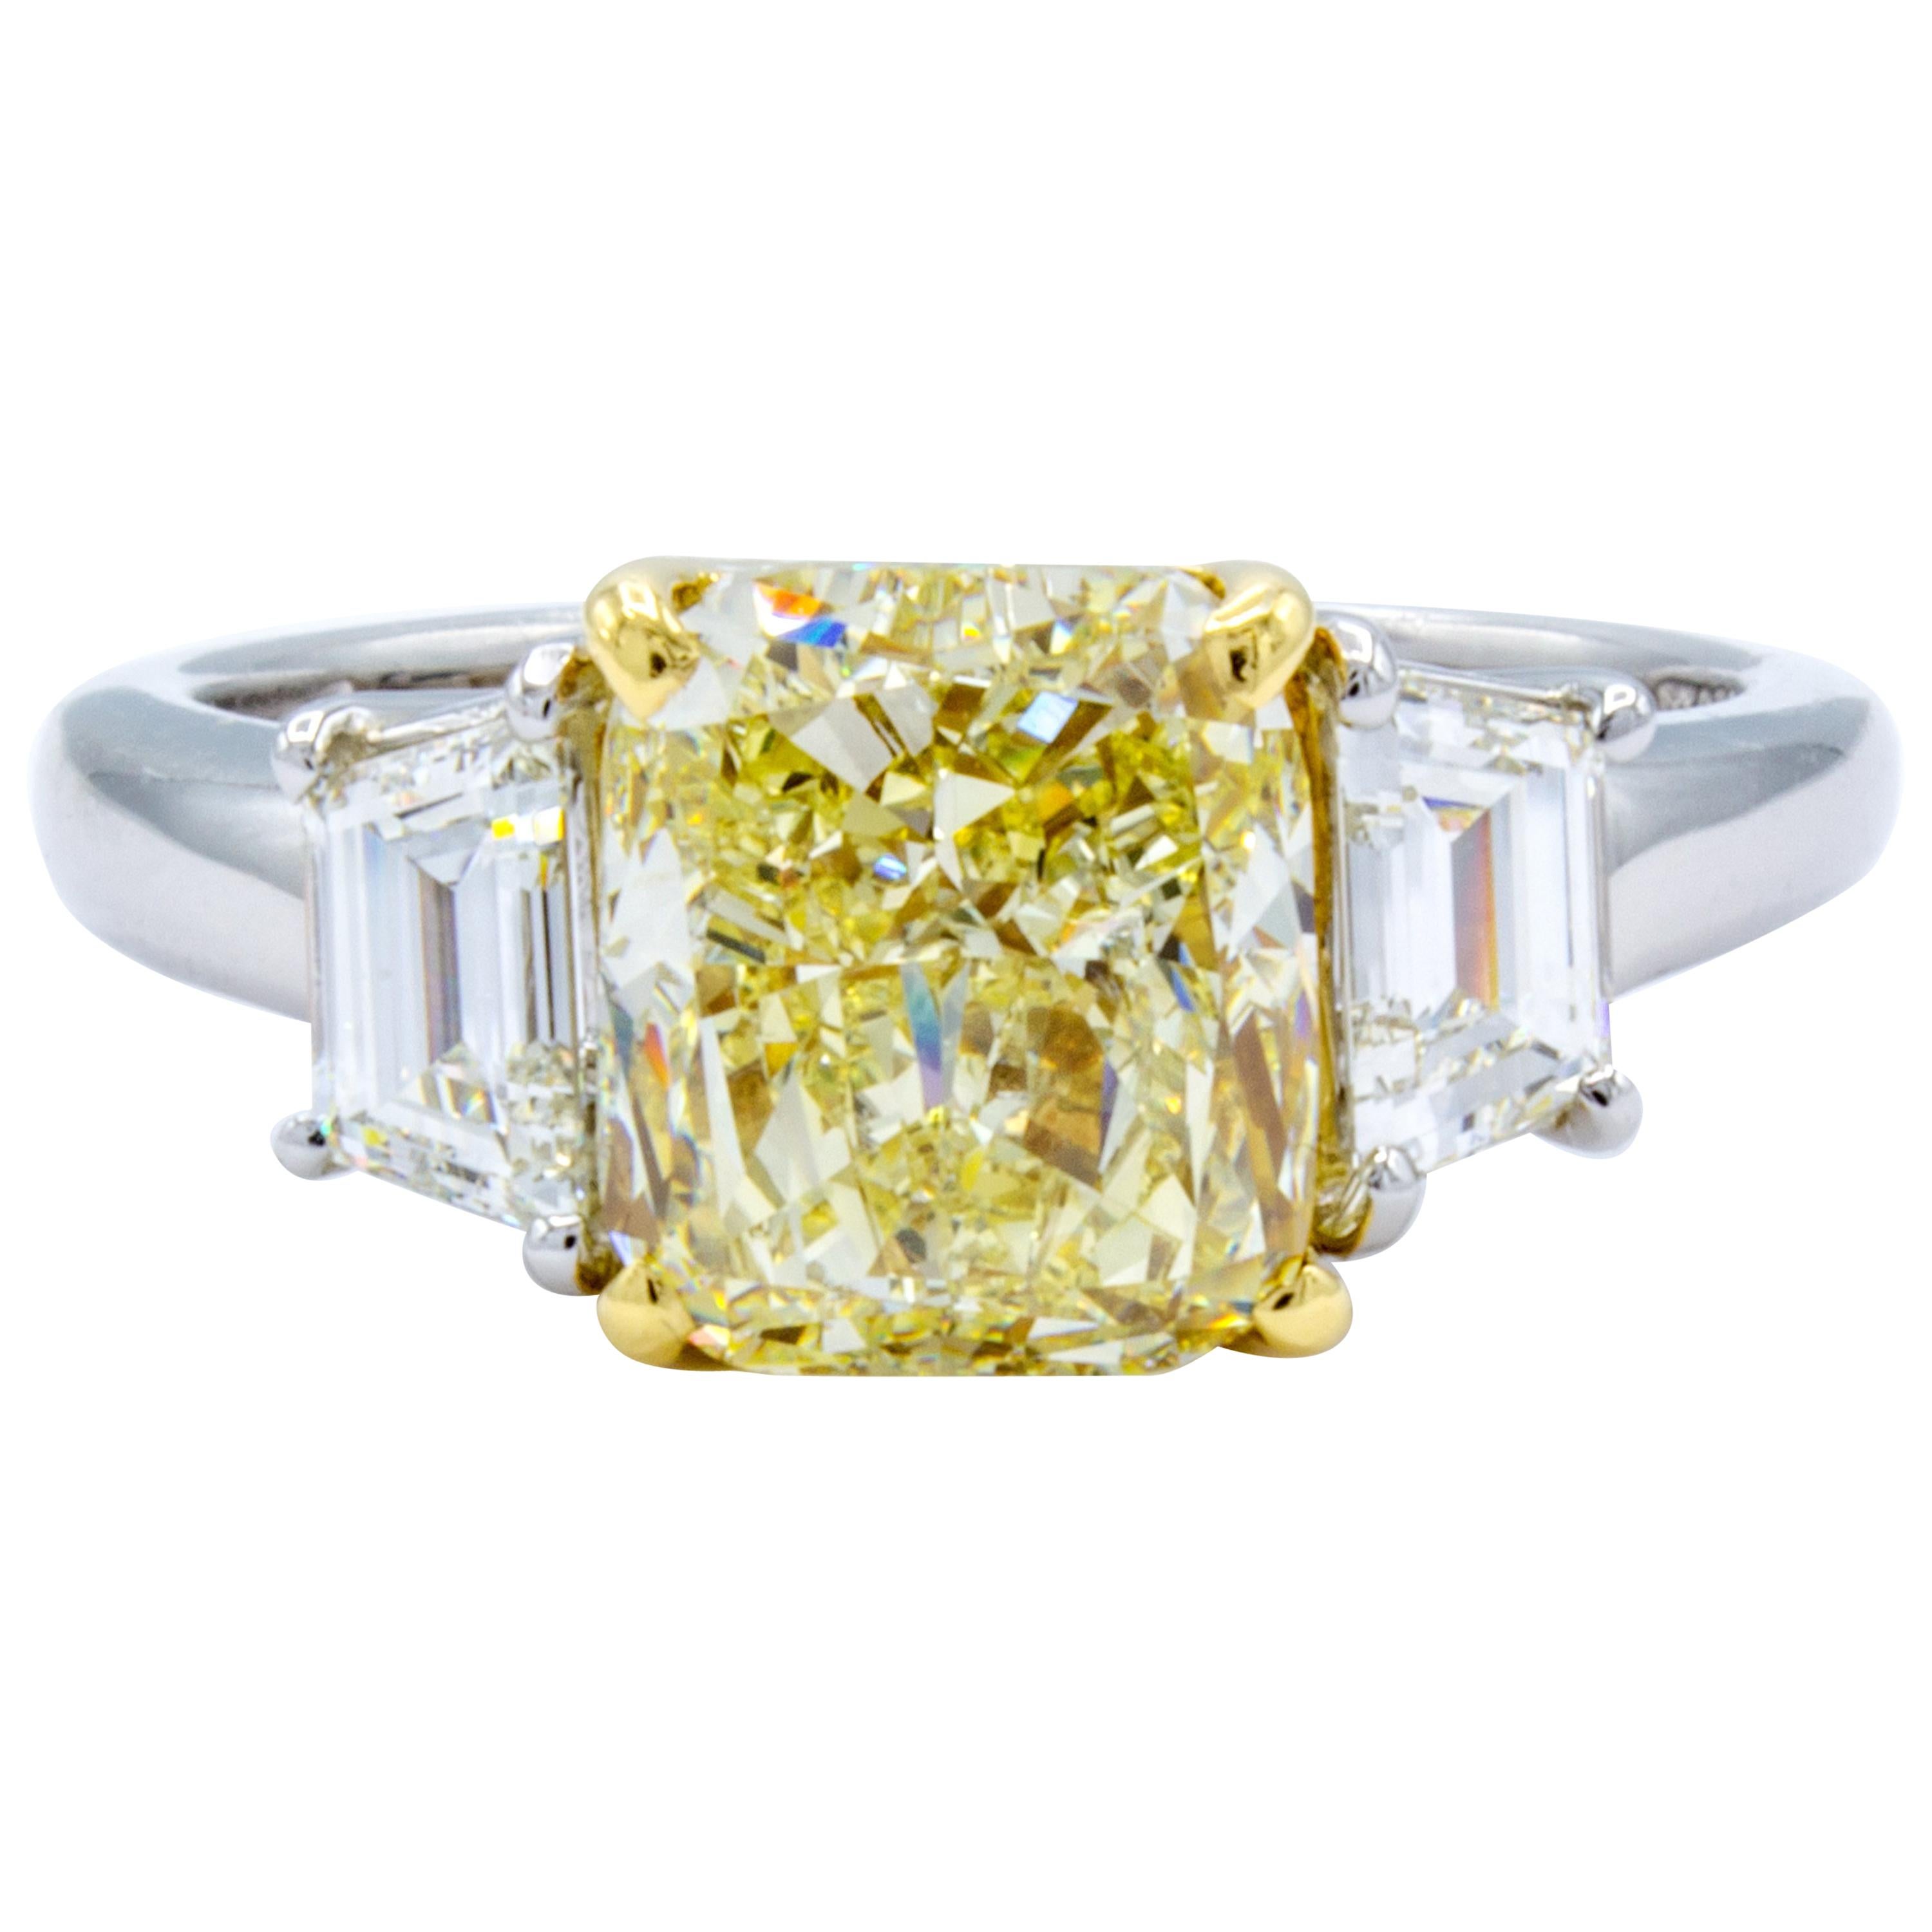 David Rosenberg 3.01 ct Cushion Fancy Light Yellow GIA Diamond Engagement Ring